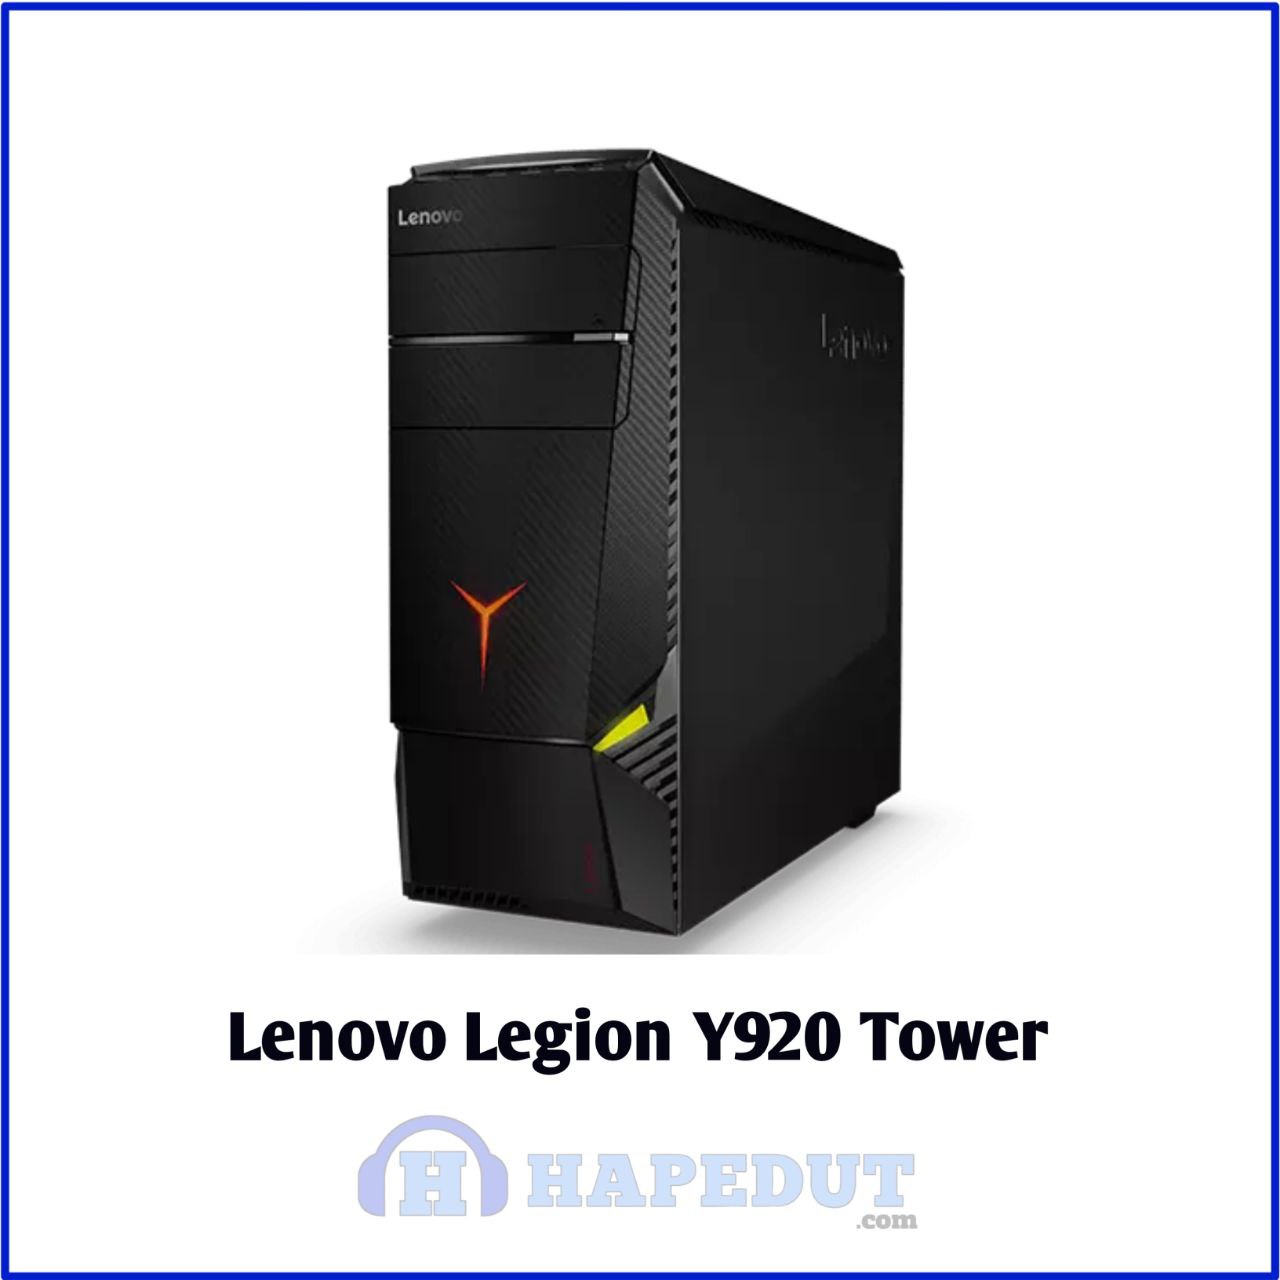 Lenovo Legion Y920 Tower : Hapedut